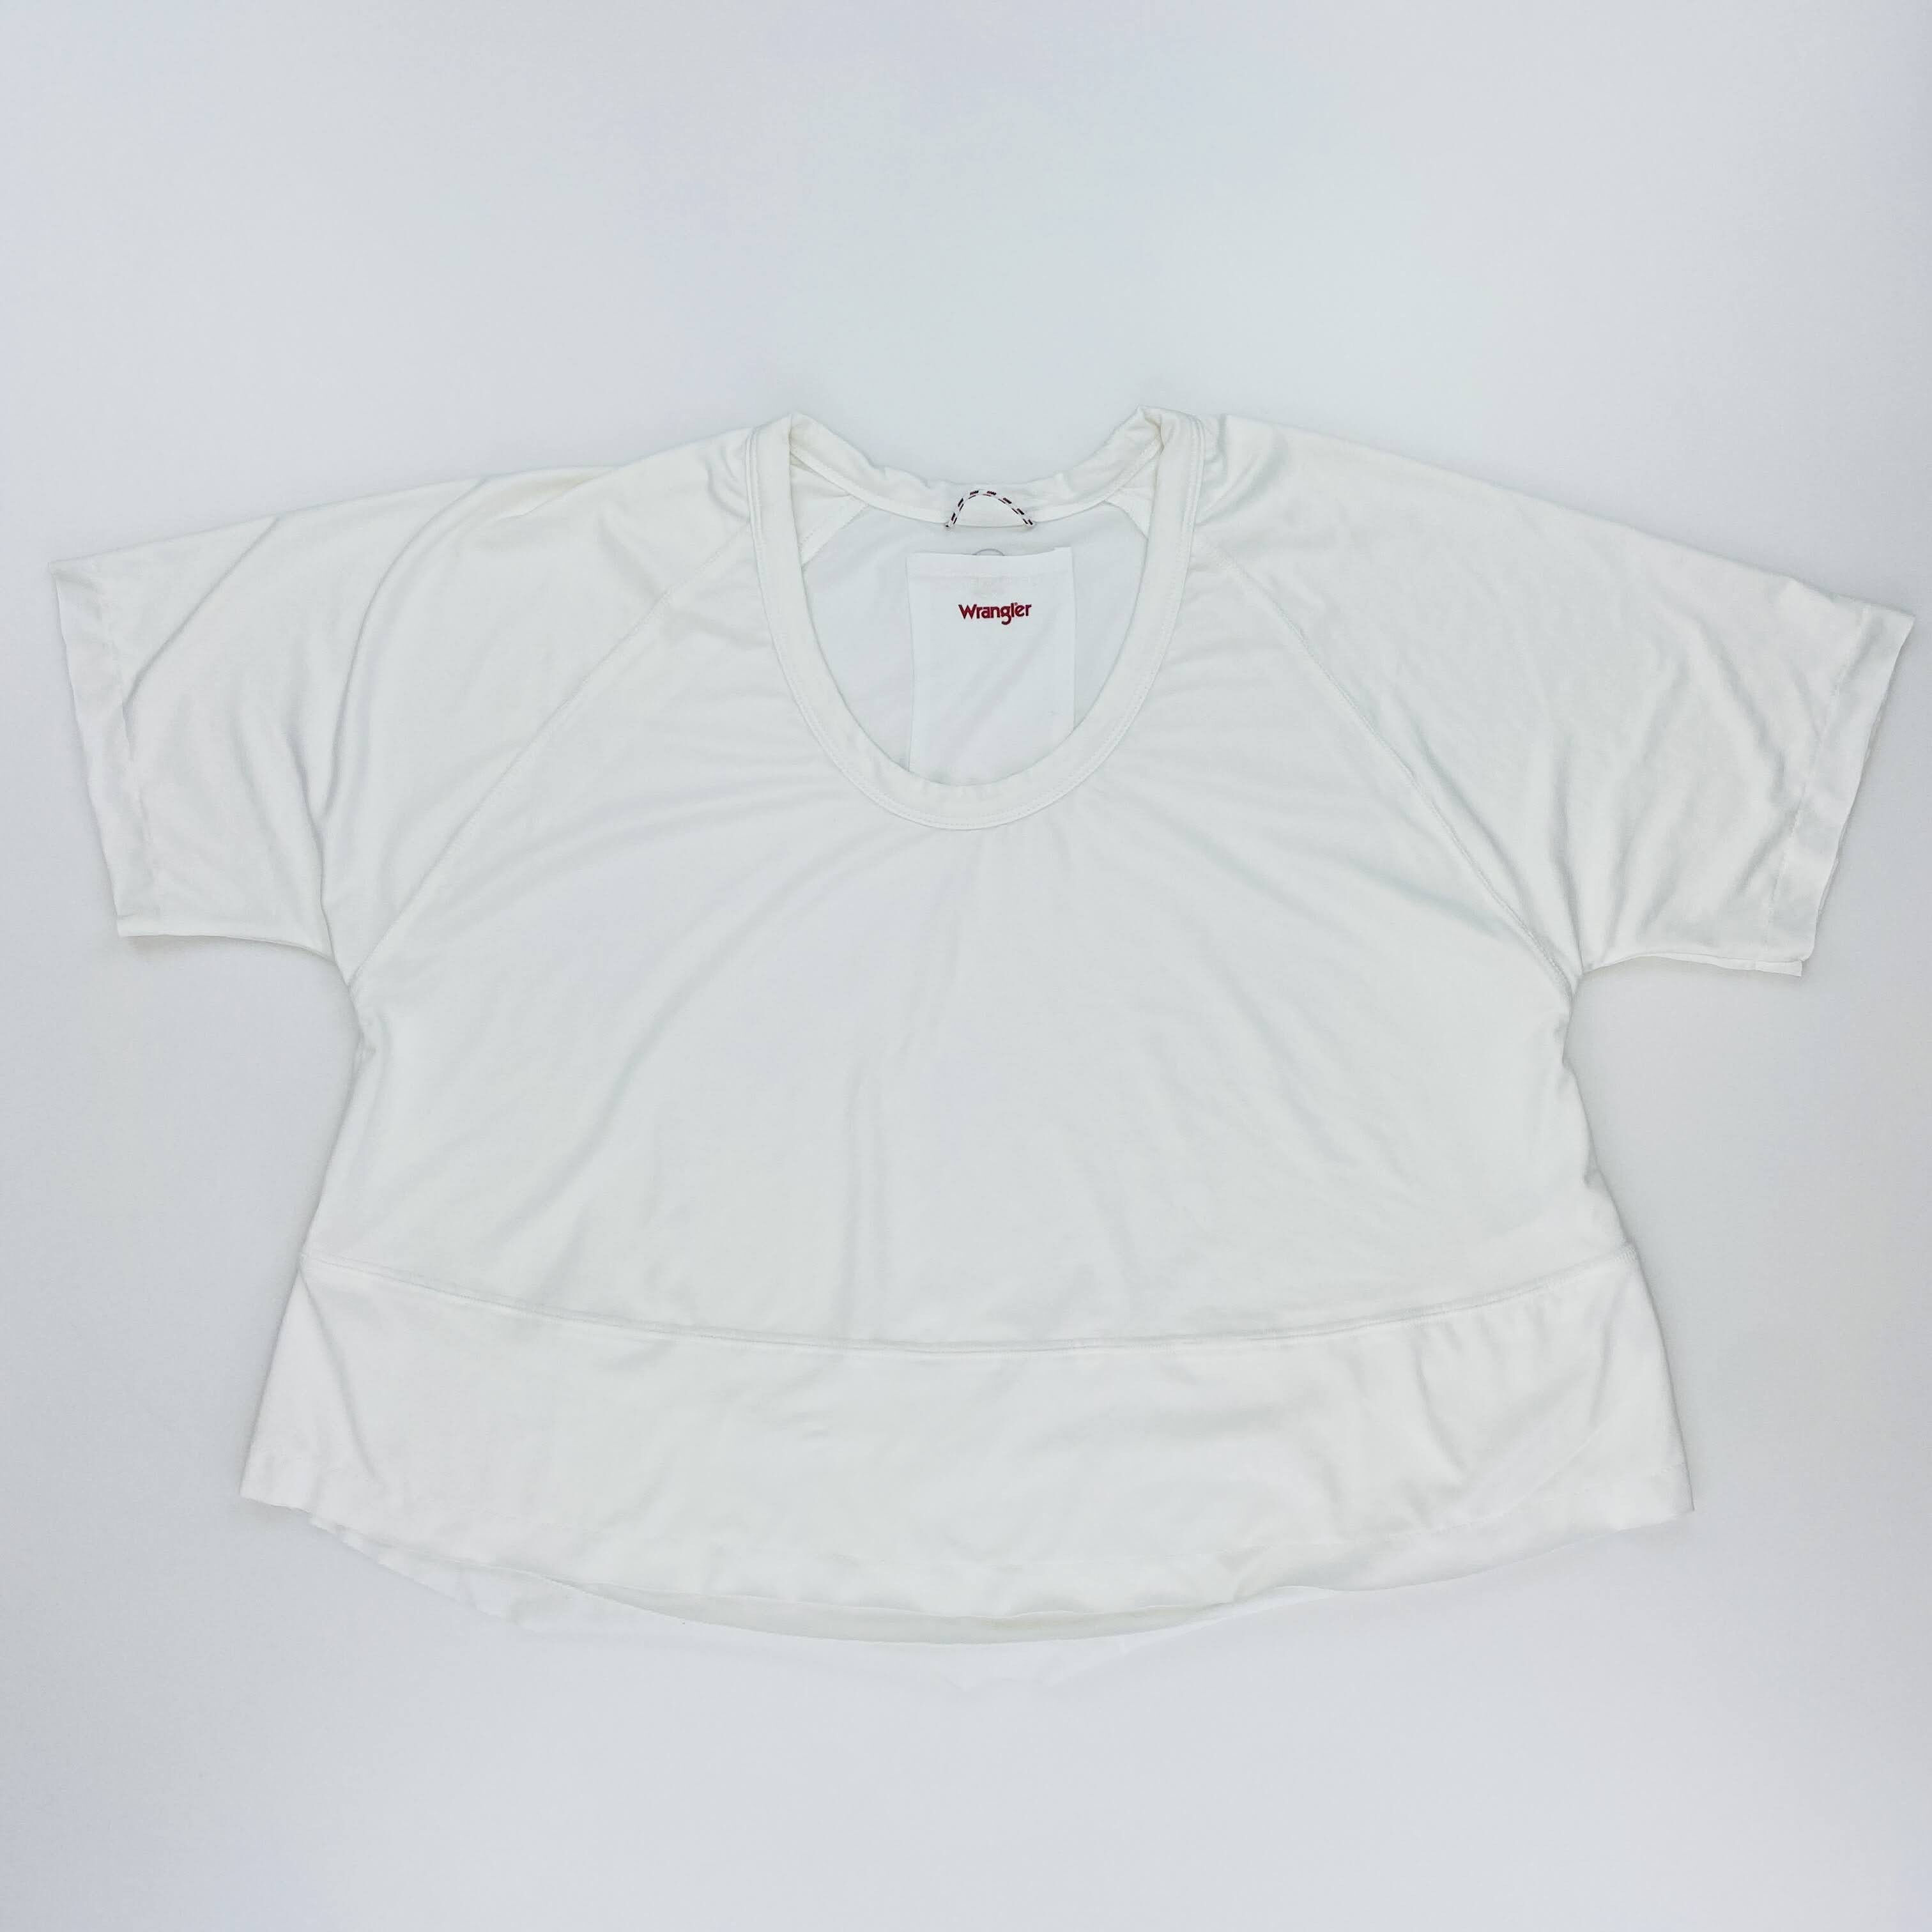 Wrangler Cropped Tee - T-shirt di seconda mano - Donna - Bianco - S | Hardloop